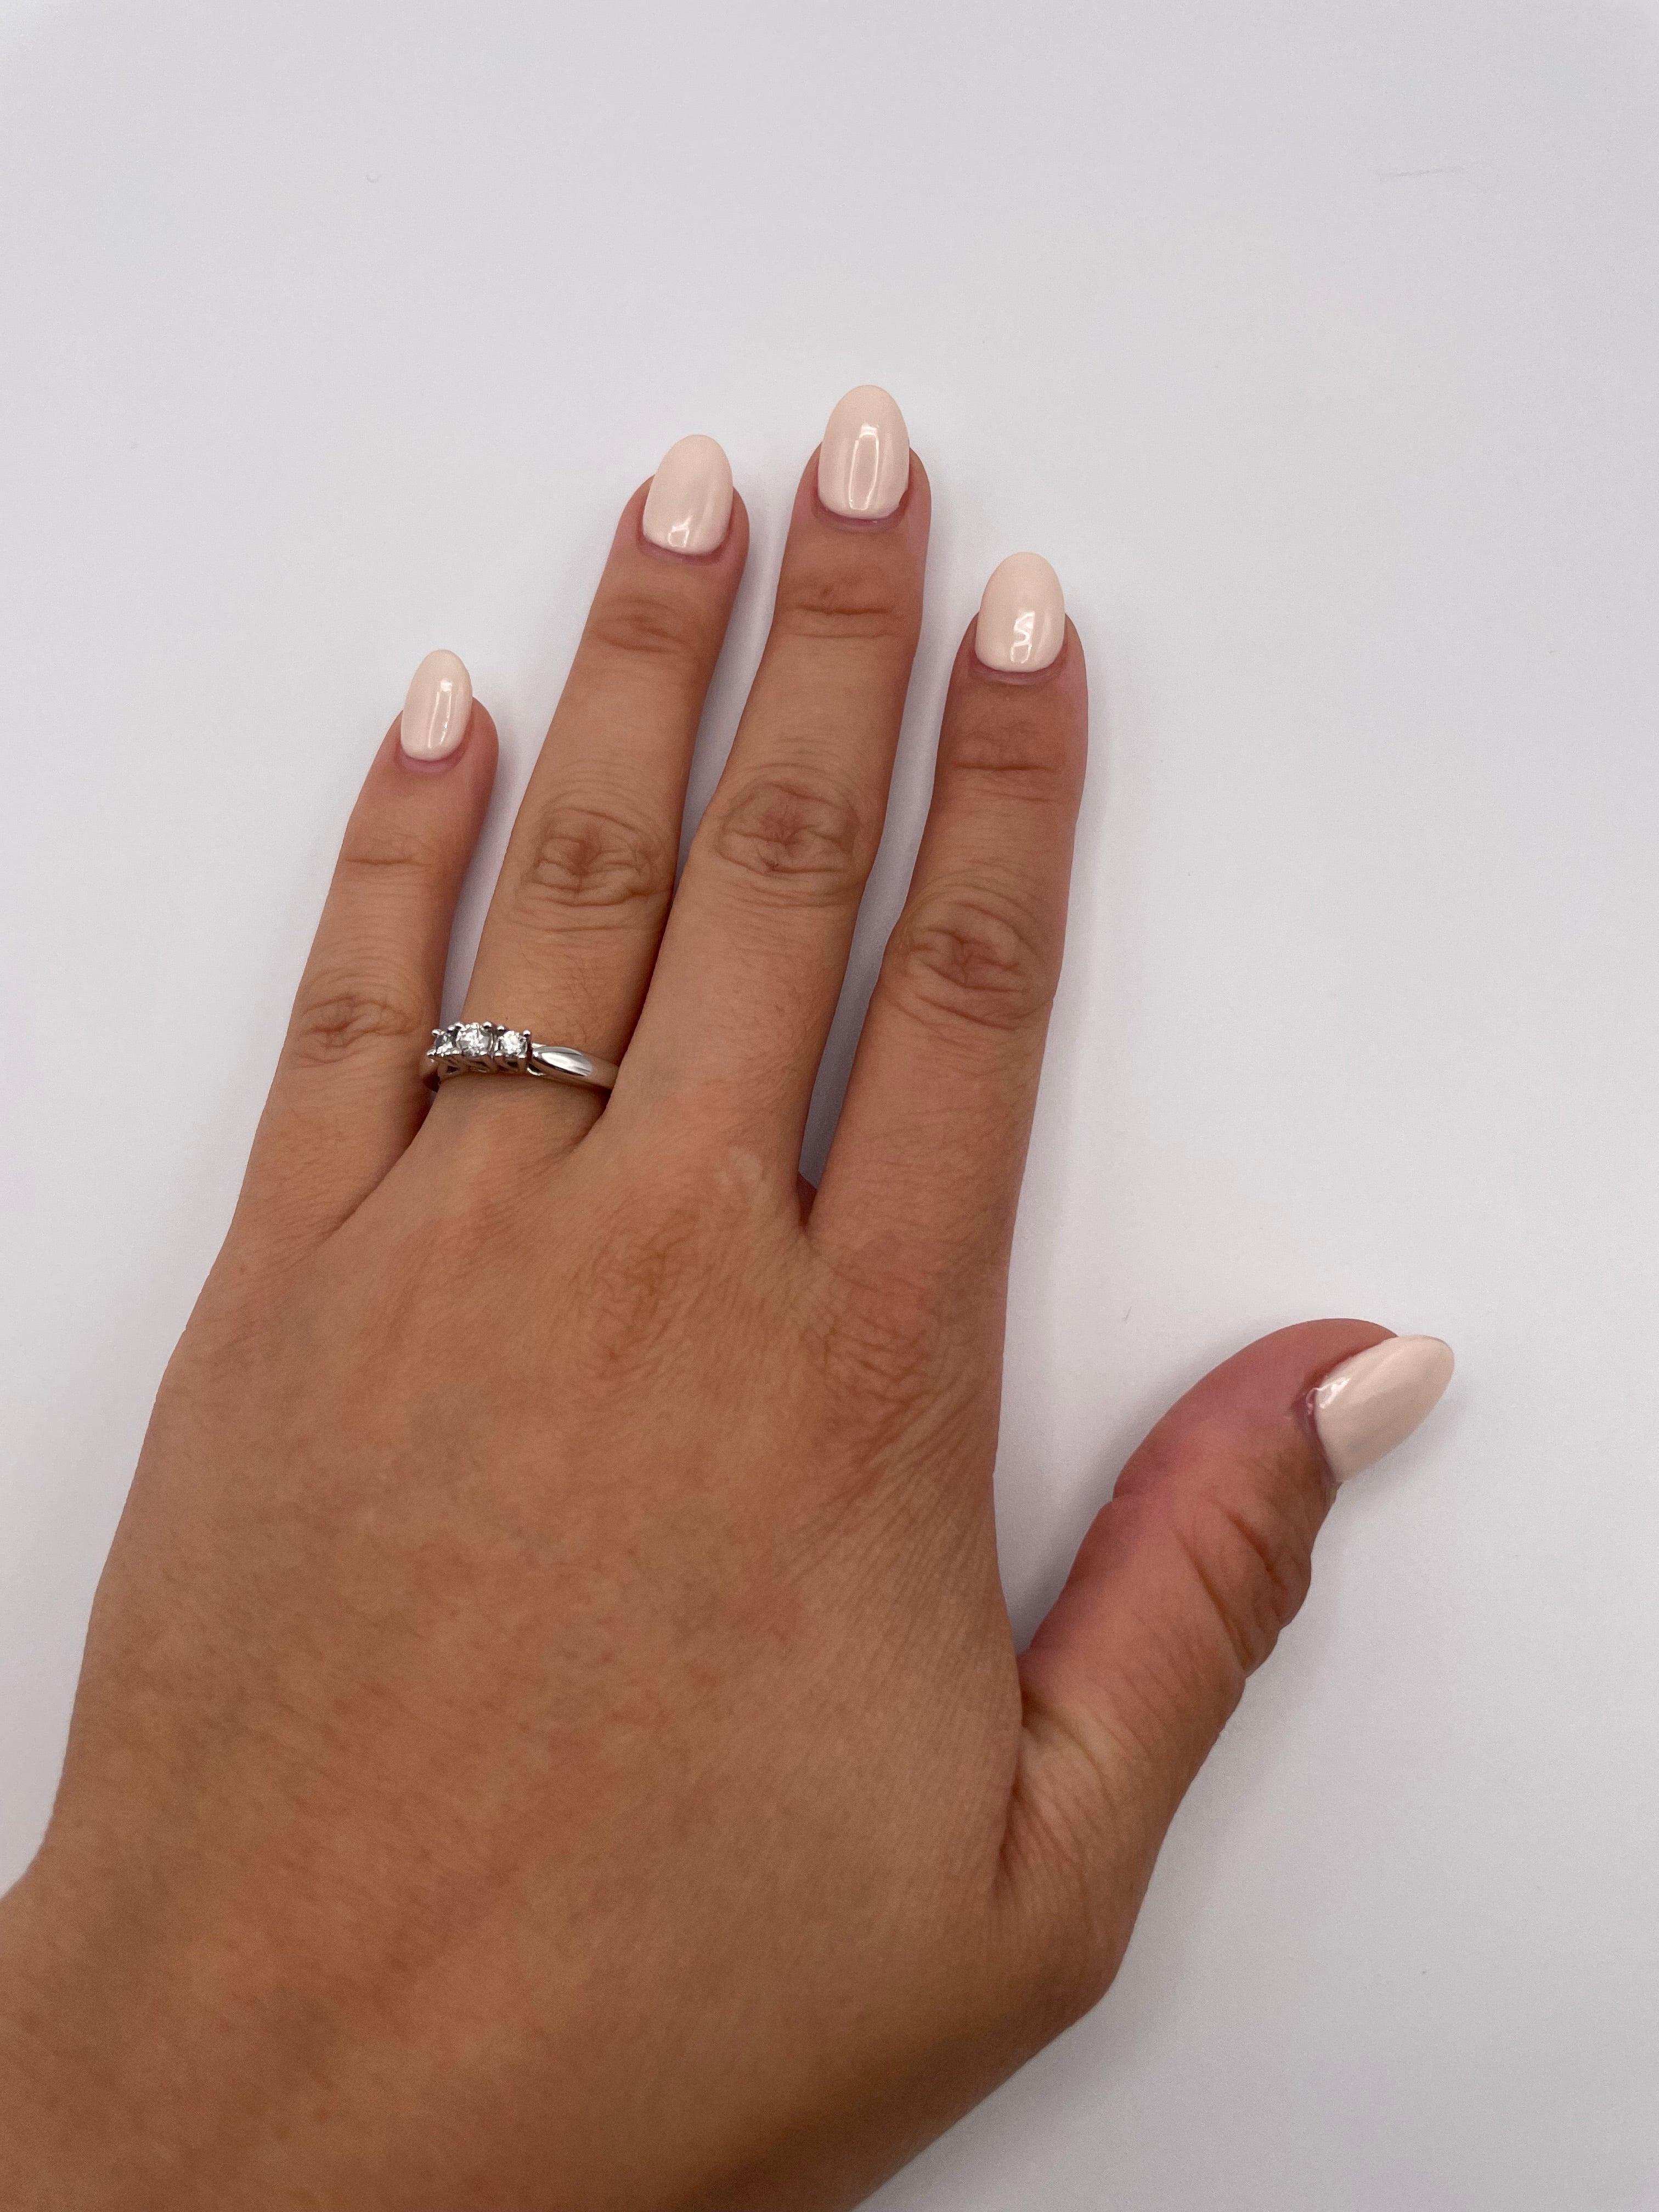 Stuckey Ring, 10 Karat White Gold Diamond 0.24 Carats - Le Vive Jewelry in Riverside